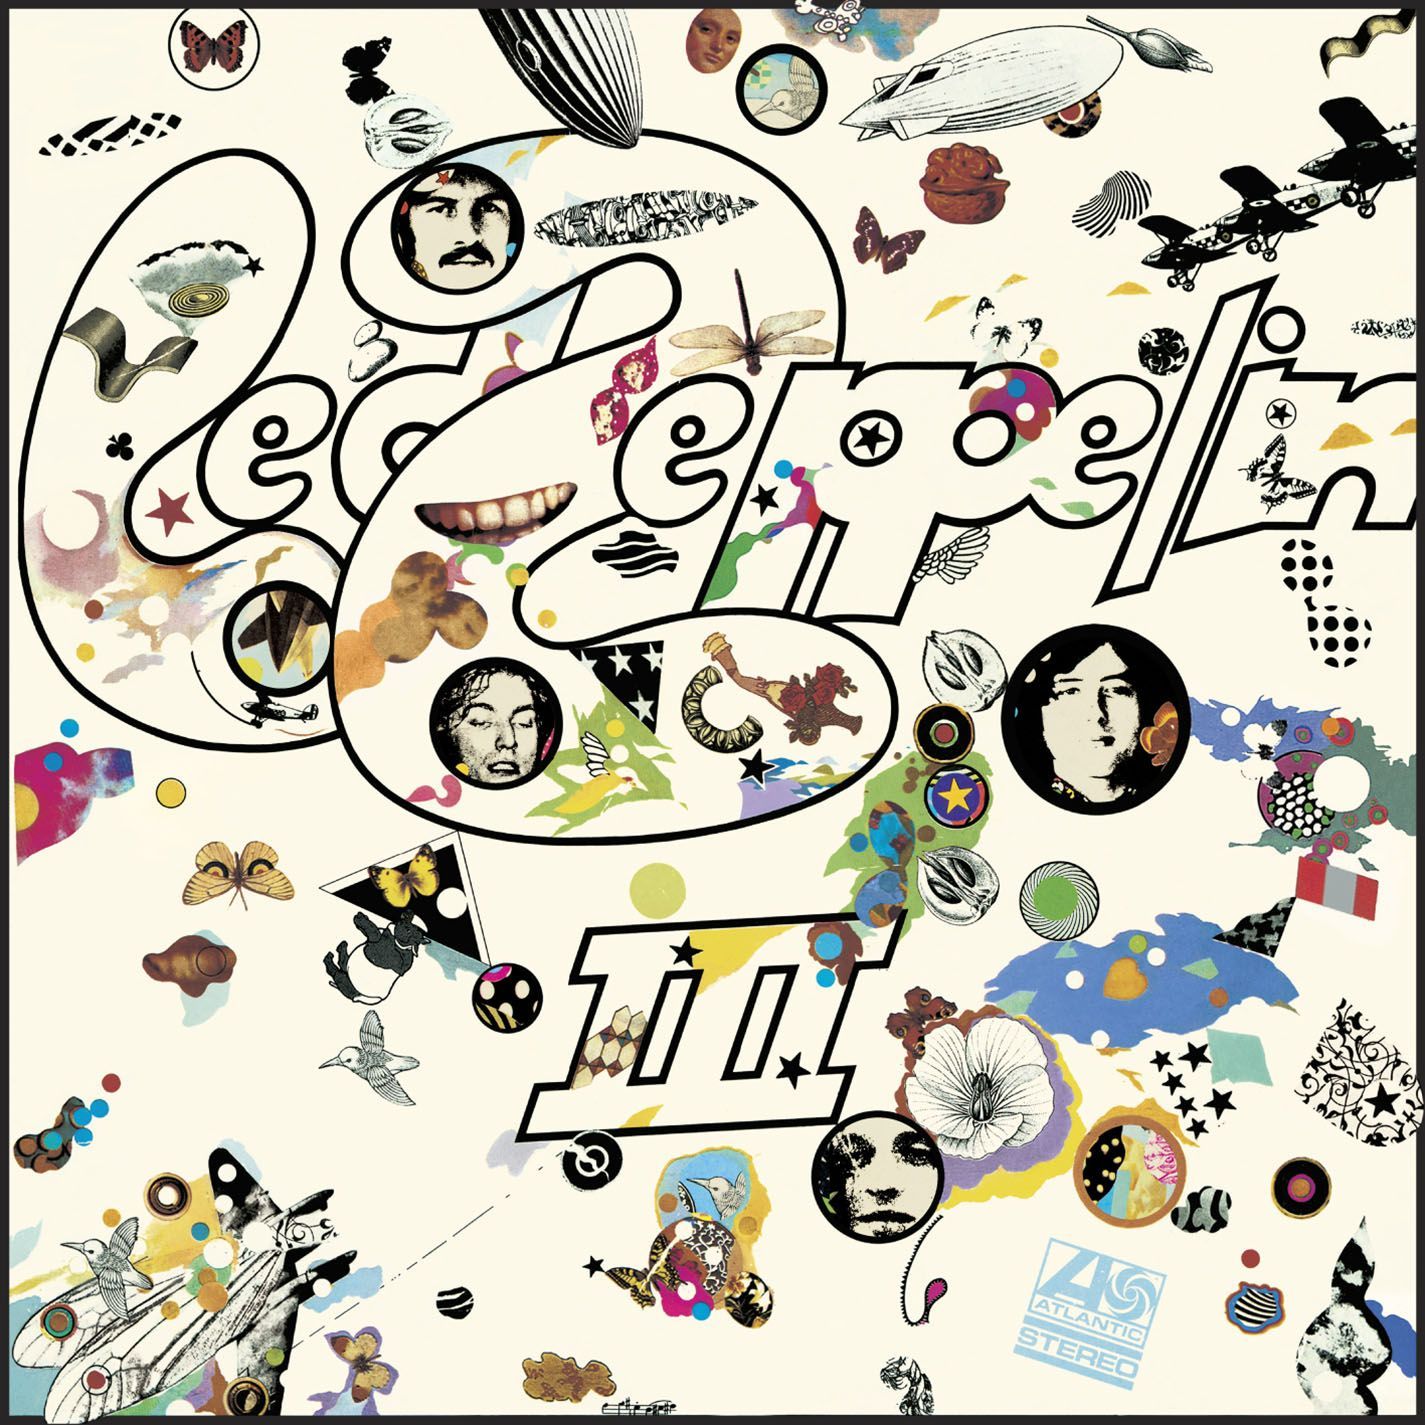 Led Zeppelin III|Led Zeppelin